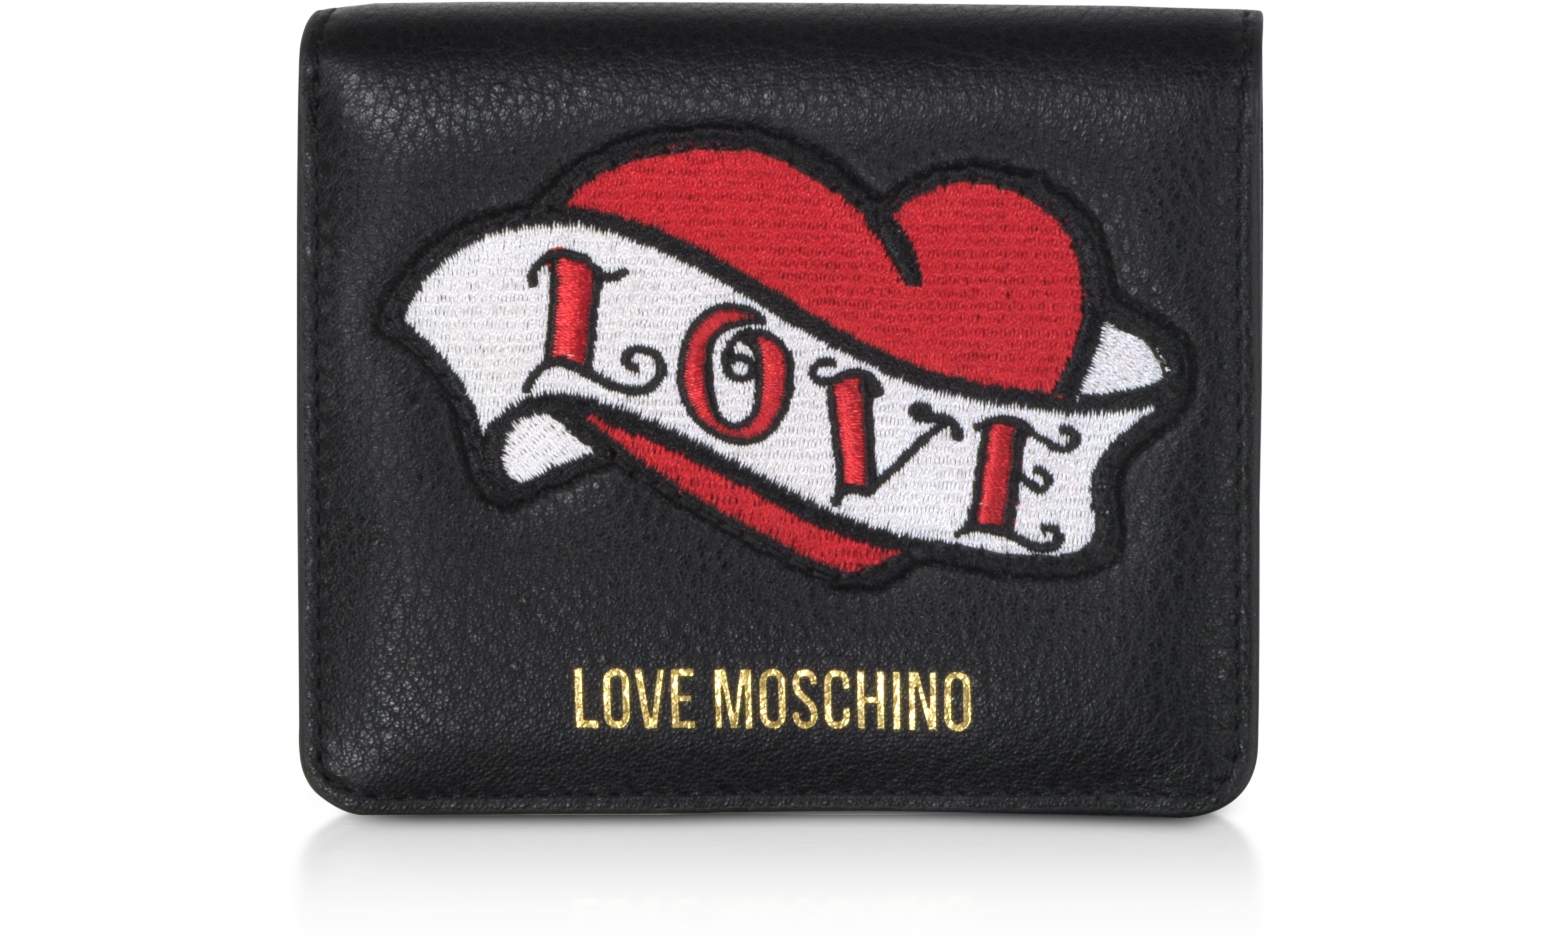 love moschino black wallet